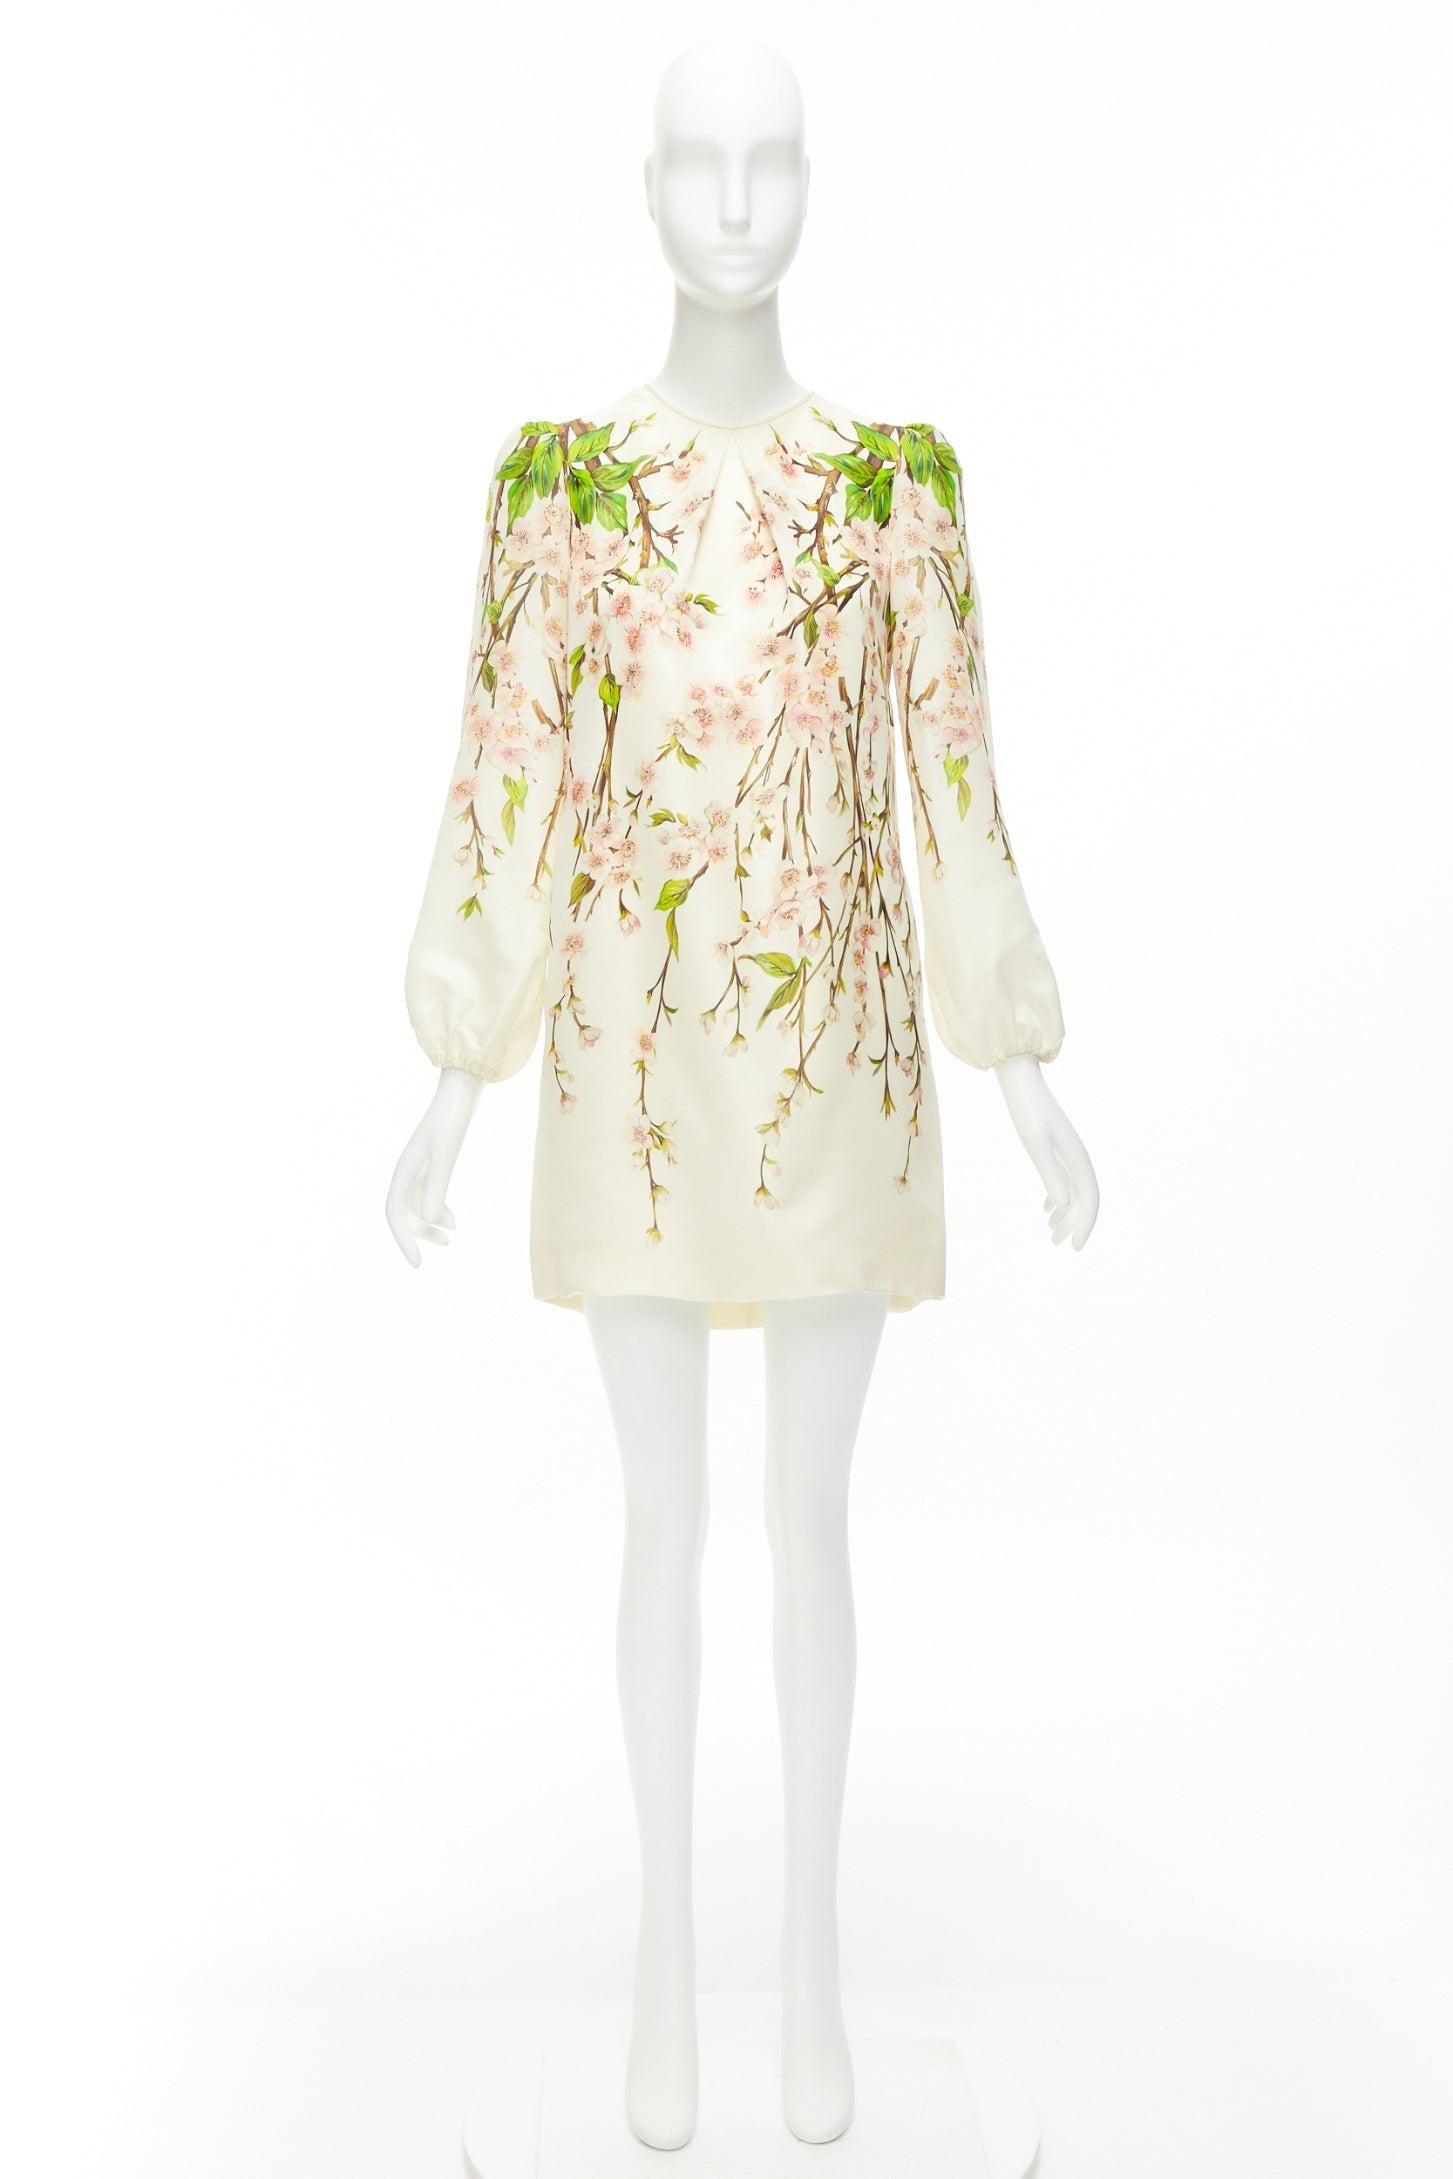 DOLCE GABBANA 100% silk cream cherry blossom print puff white dress IT40 S 6